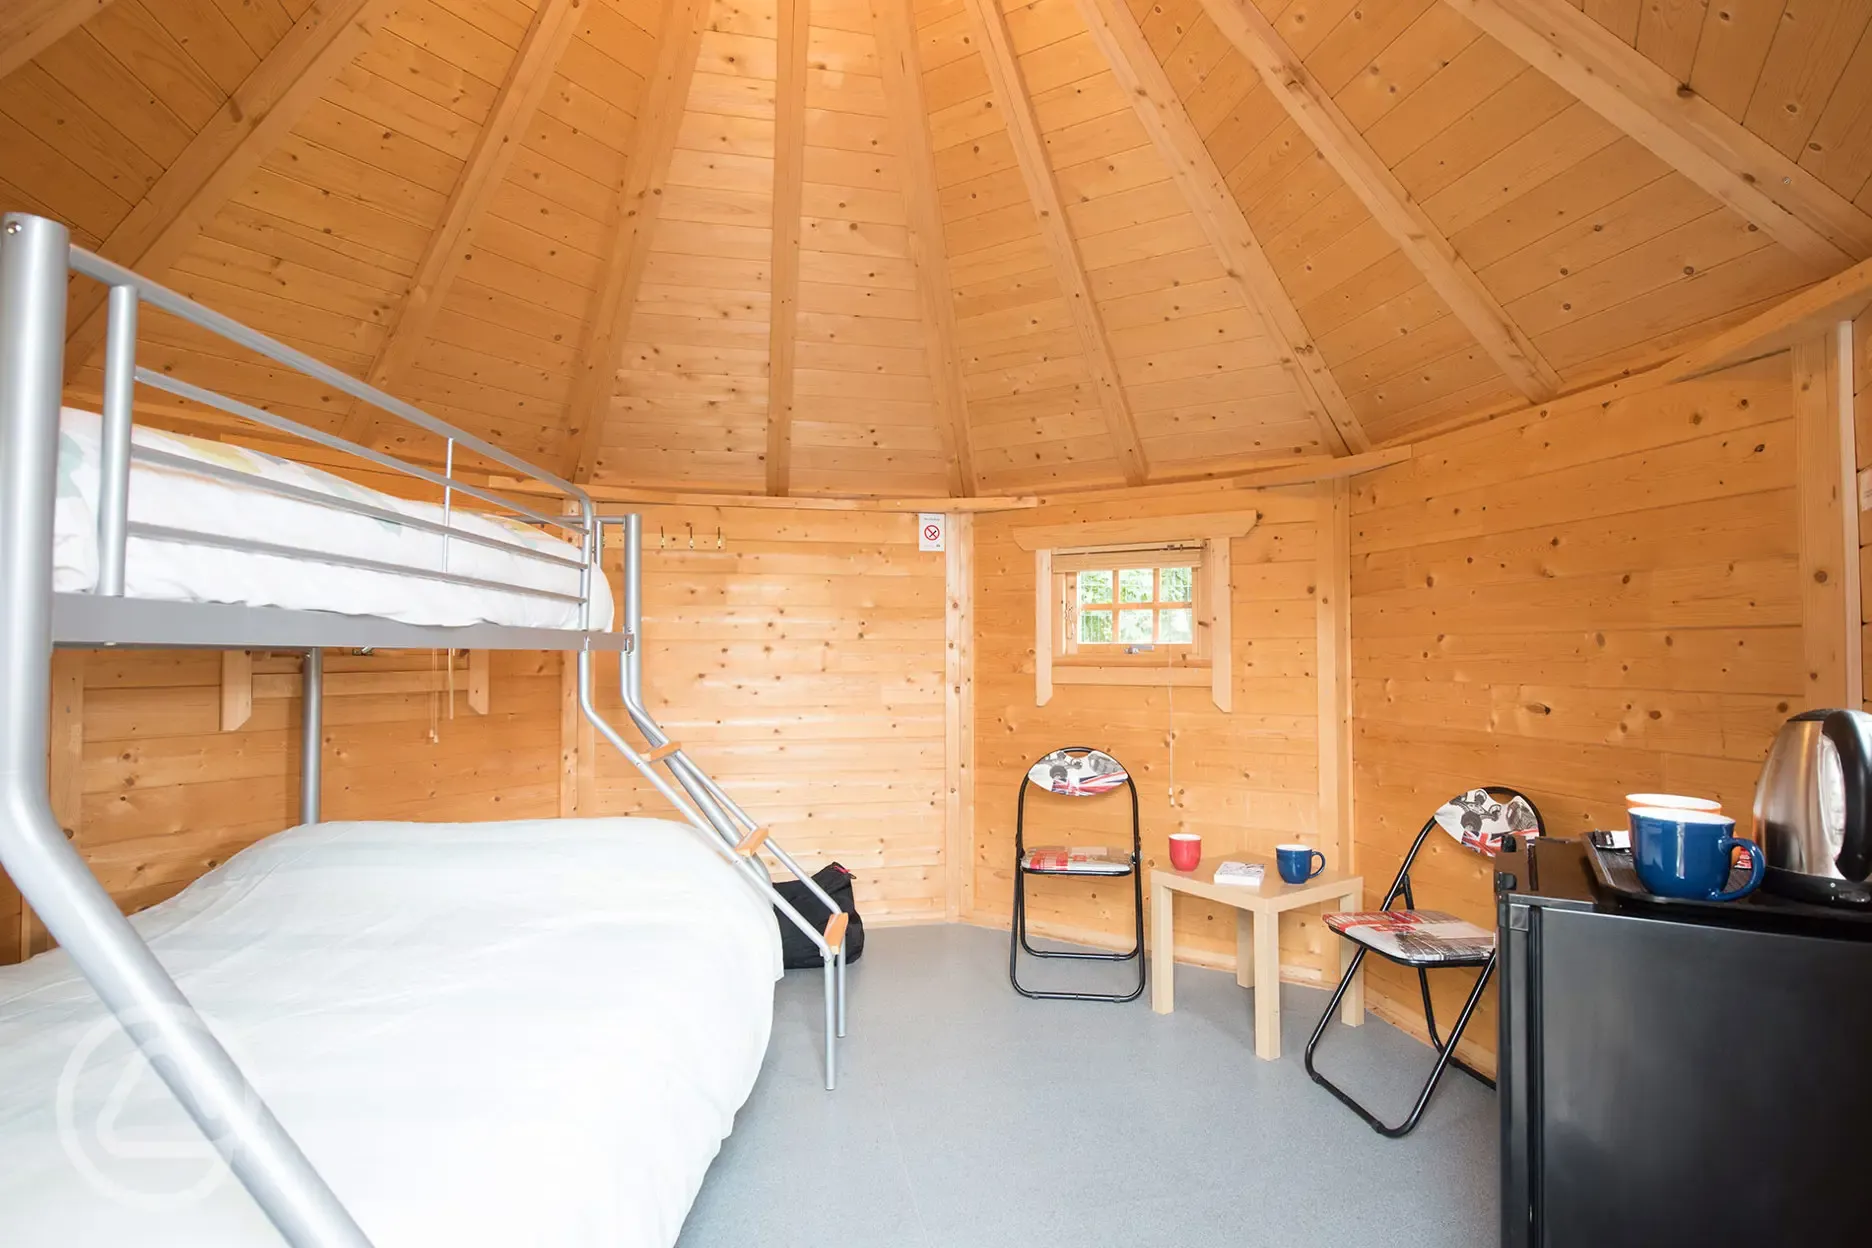 Camping cabin interior